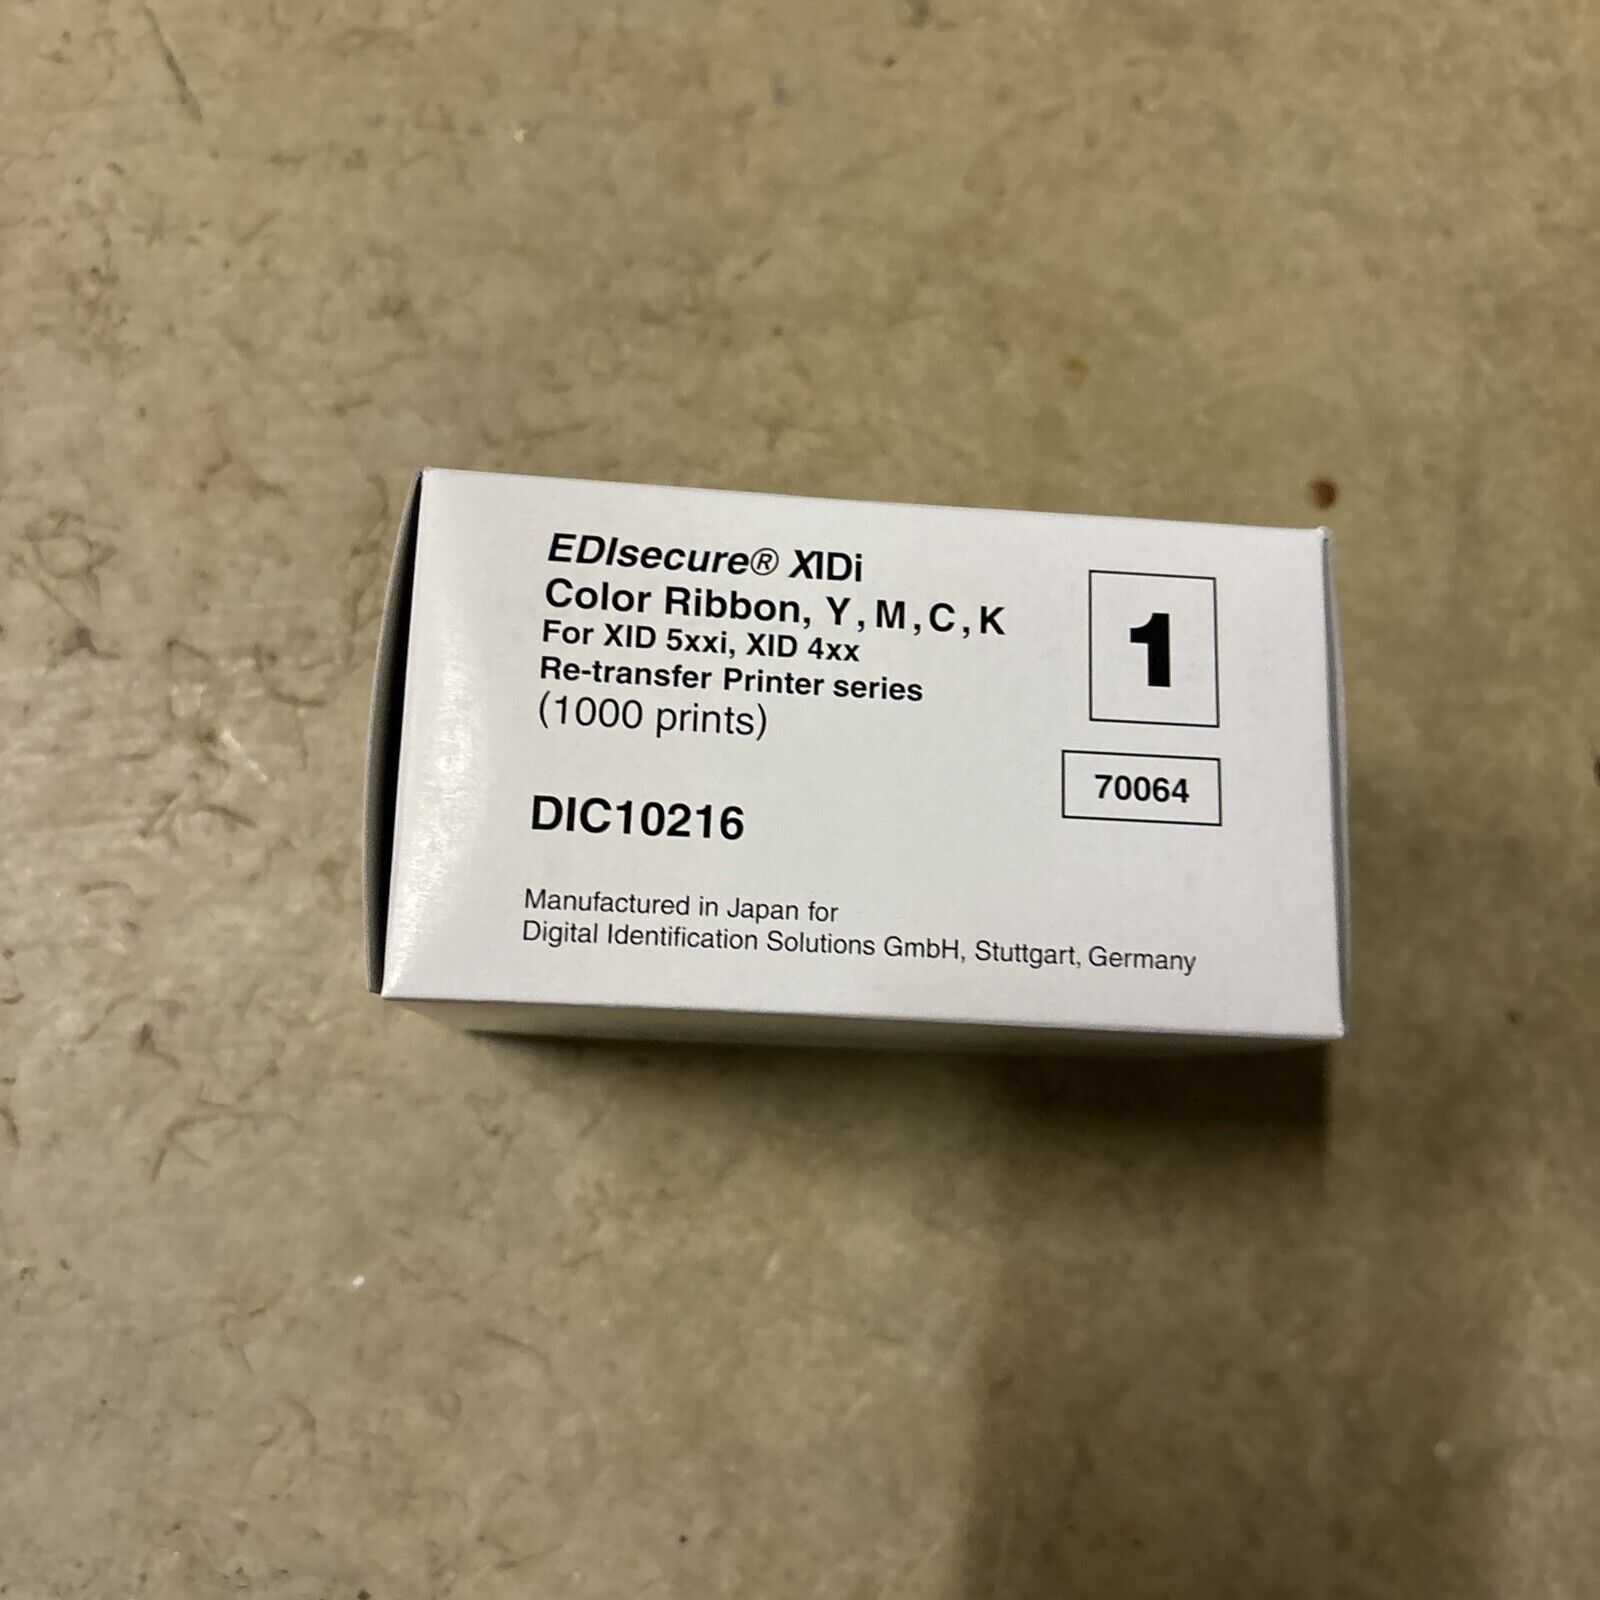 DIC10216 EDIsecure AXIDi Color Ribbon 1000 Prints New Sealed Box